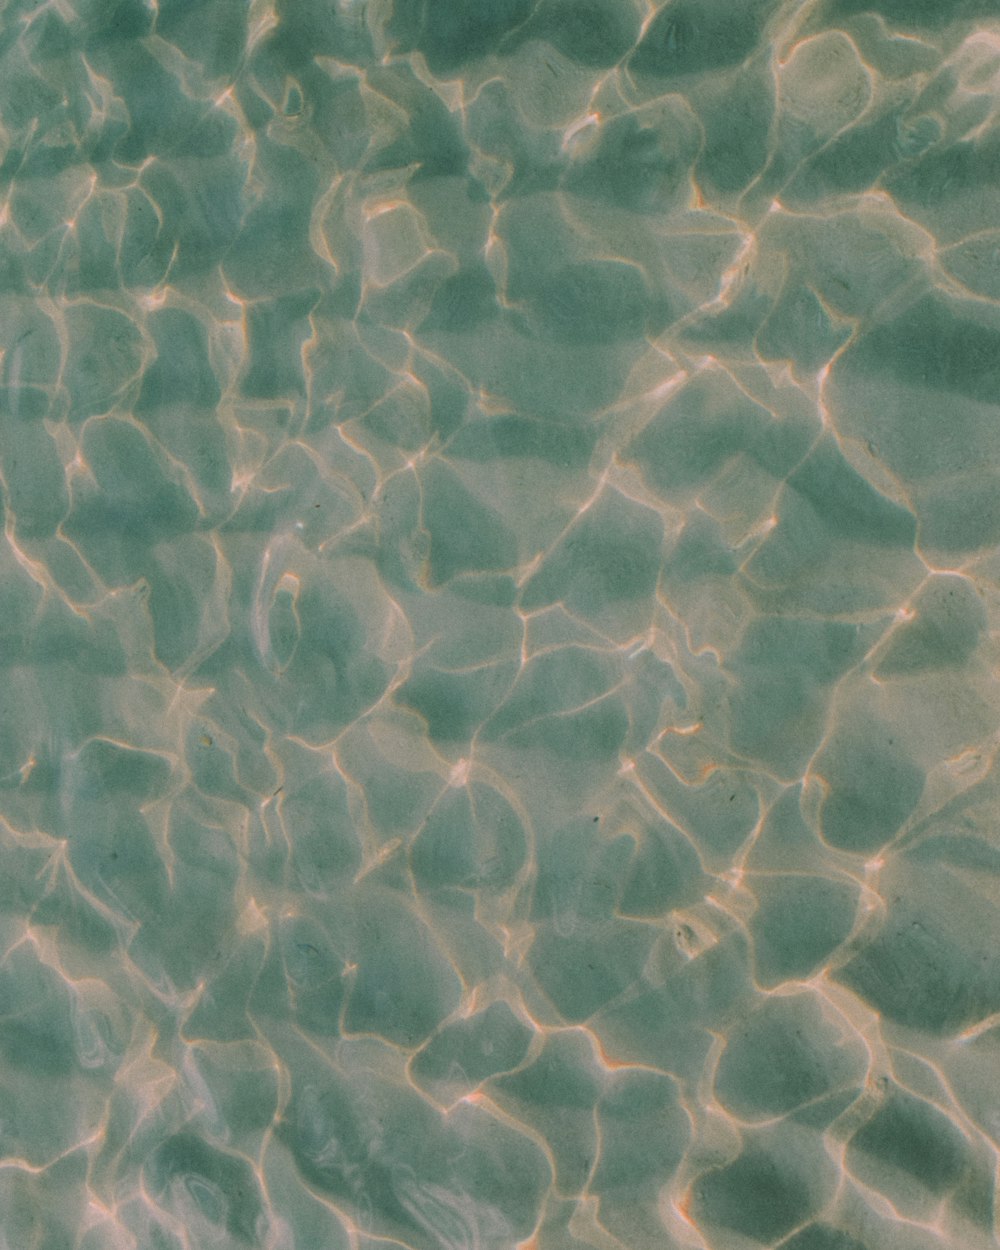 El agua refleja la luz del sol en la arena